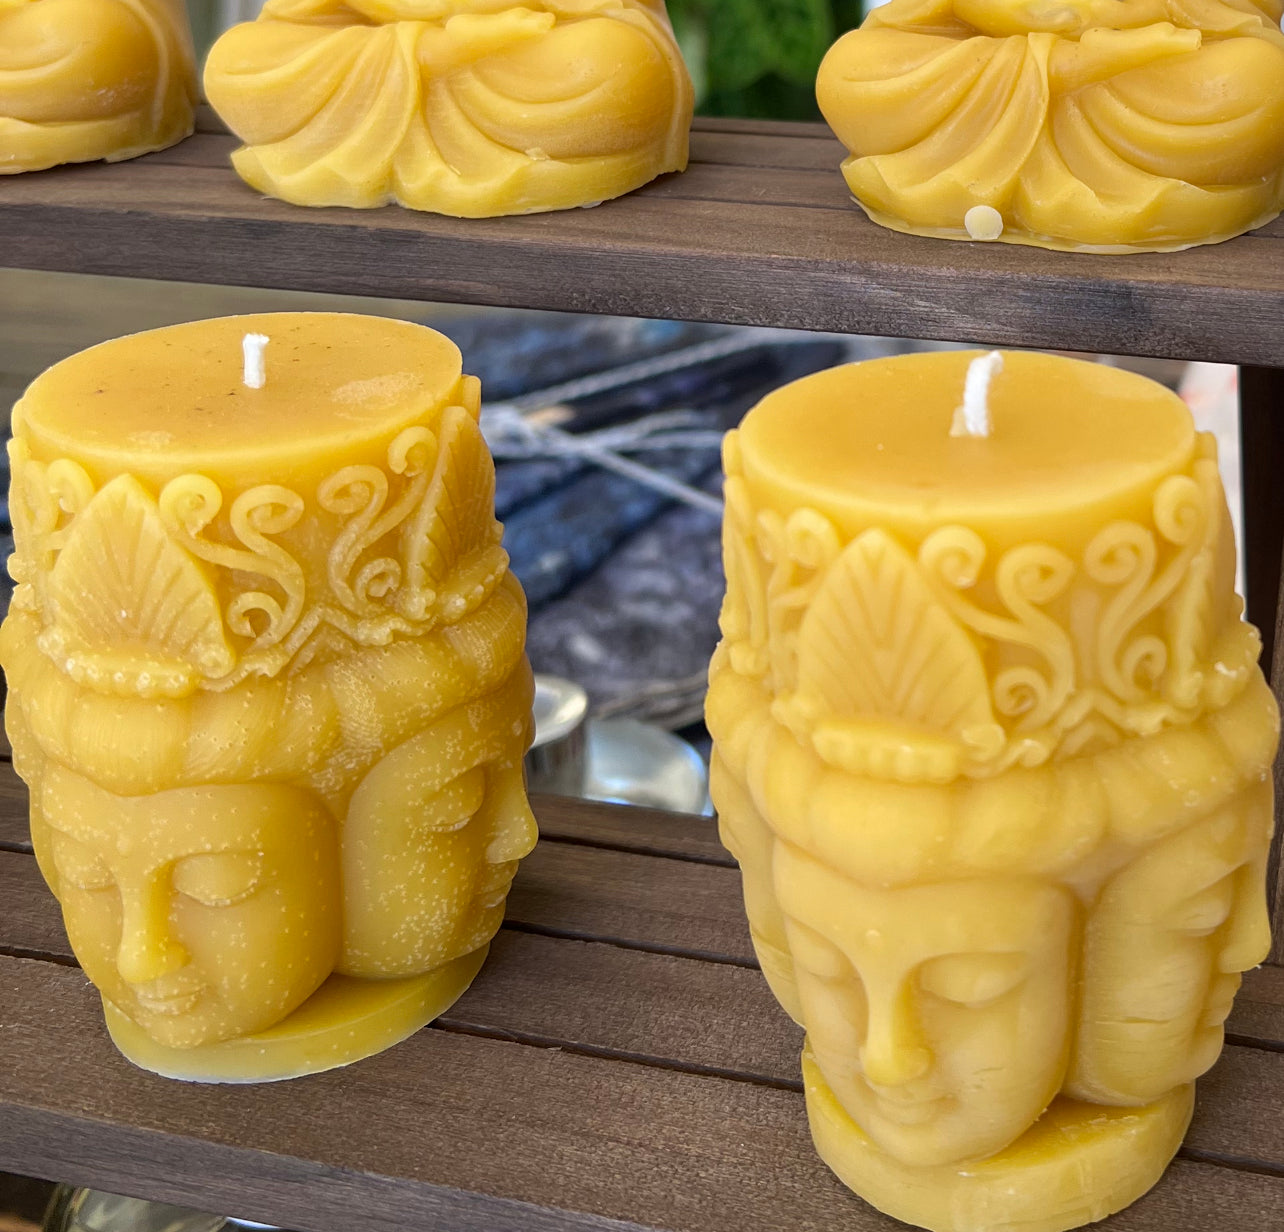 Beeswax Buddha Candle